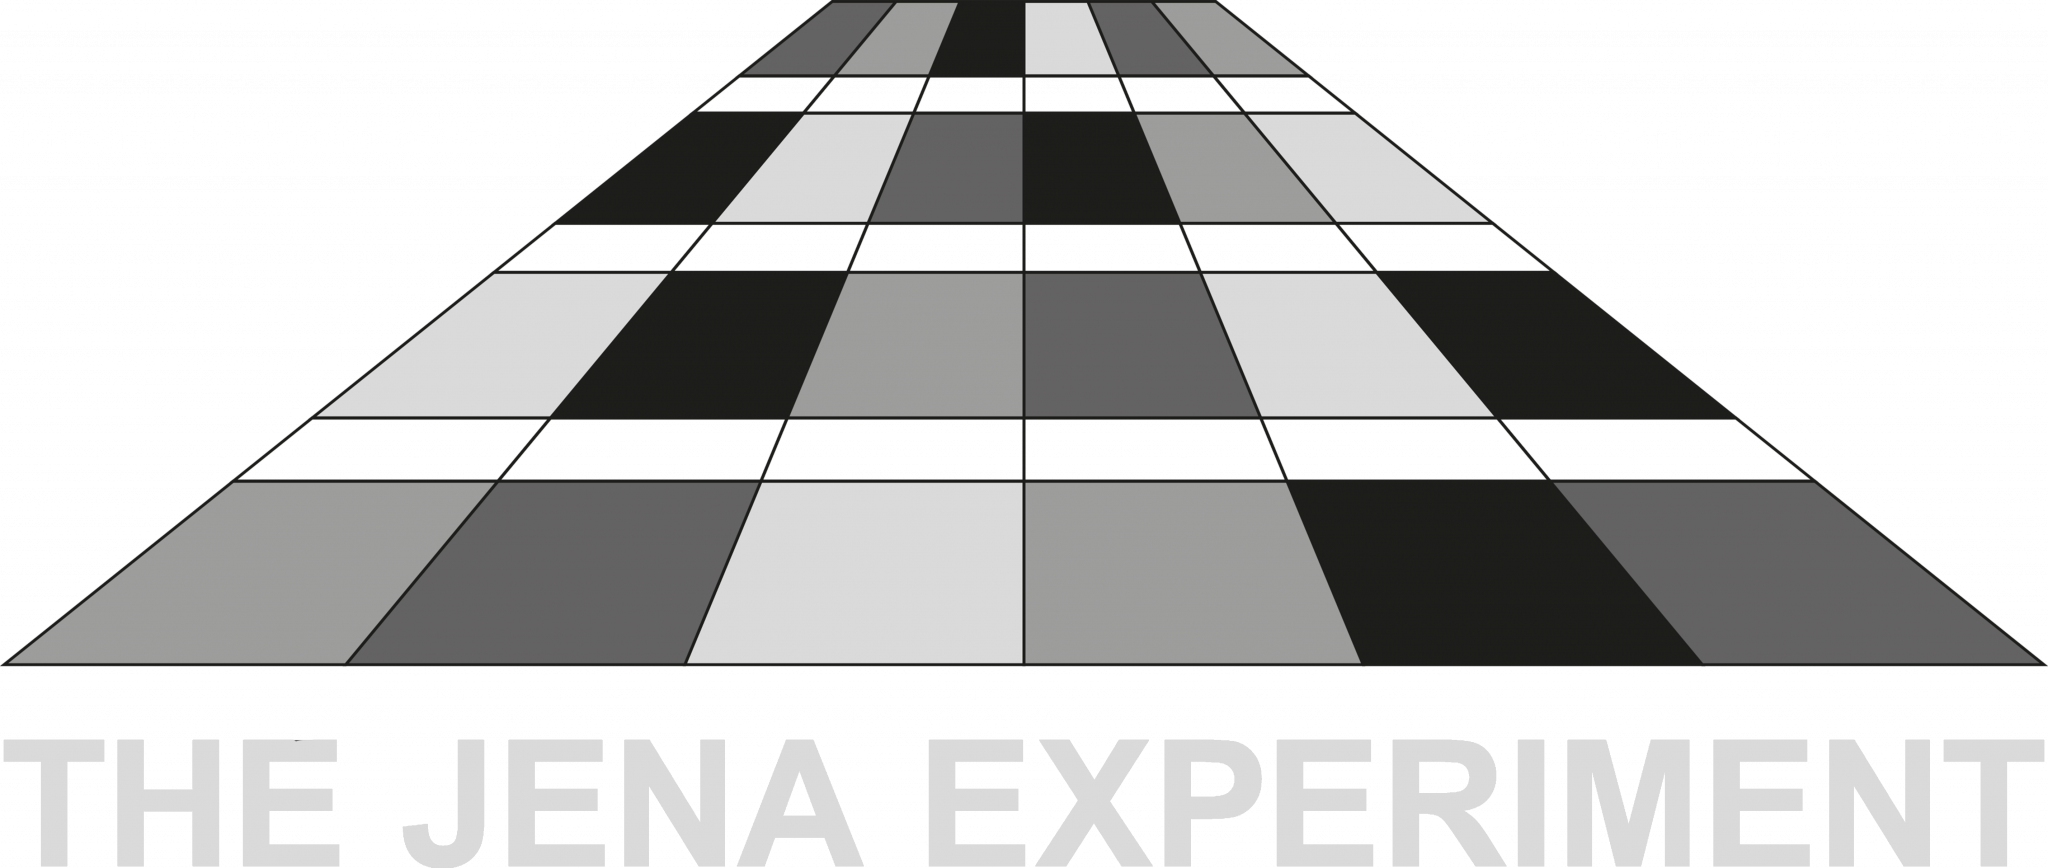 The Jena Experiment